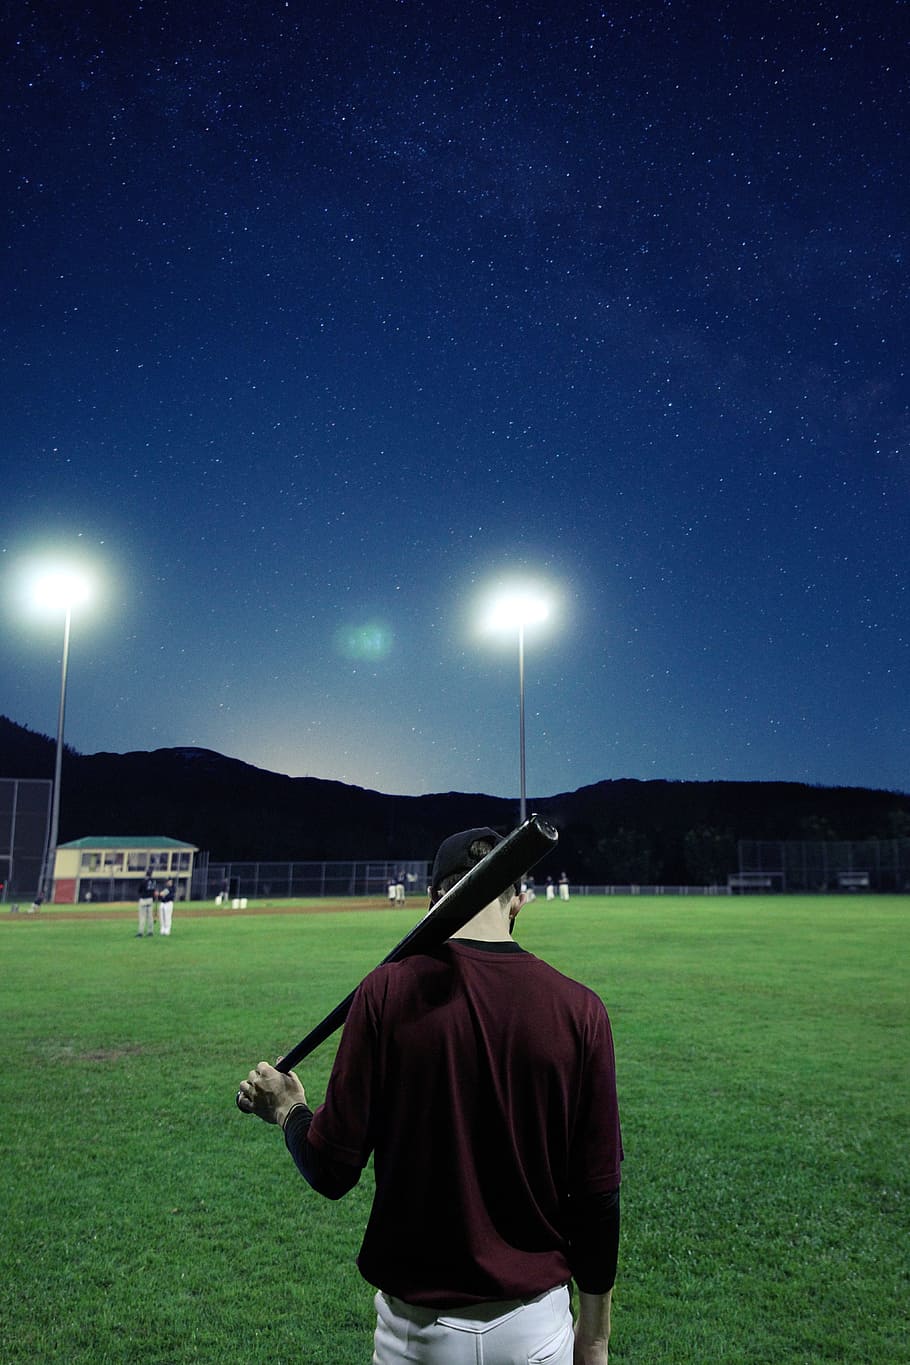 man, holding, baseball bat, baseball field, nighttime, baseball, player, stadium, field, arena